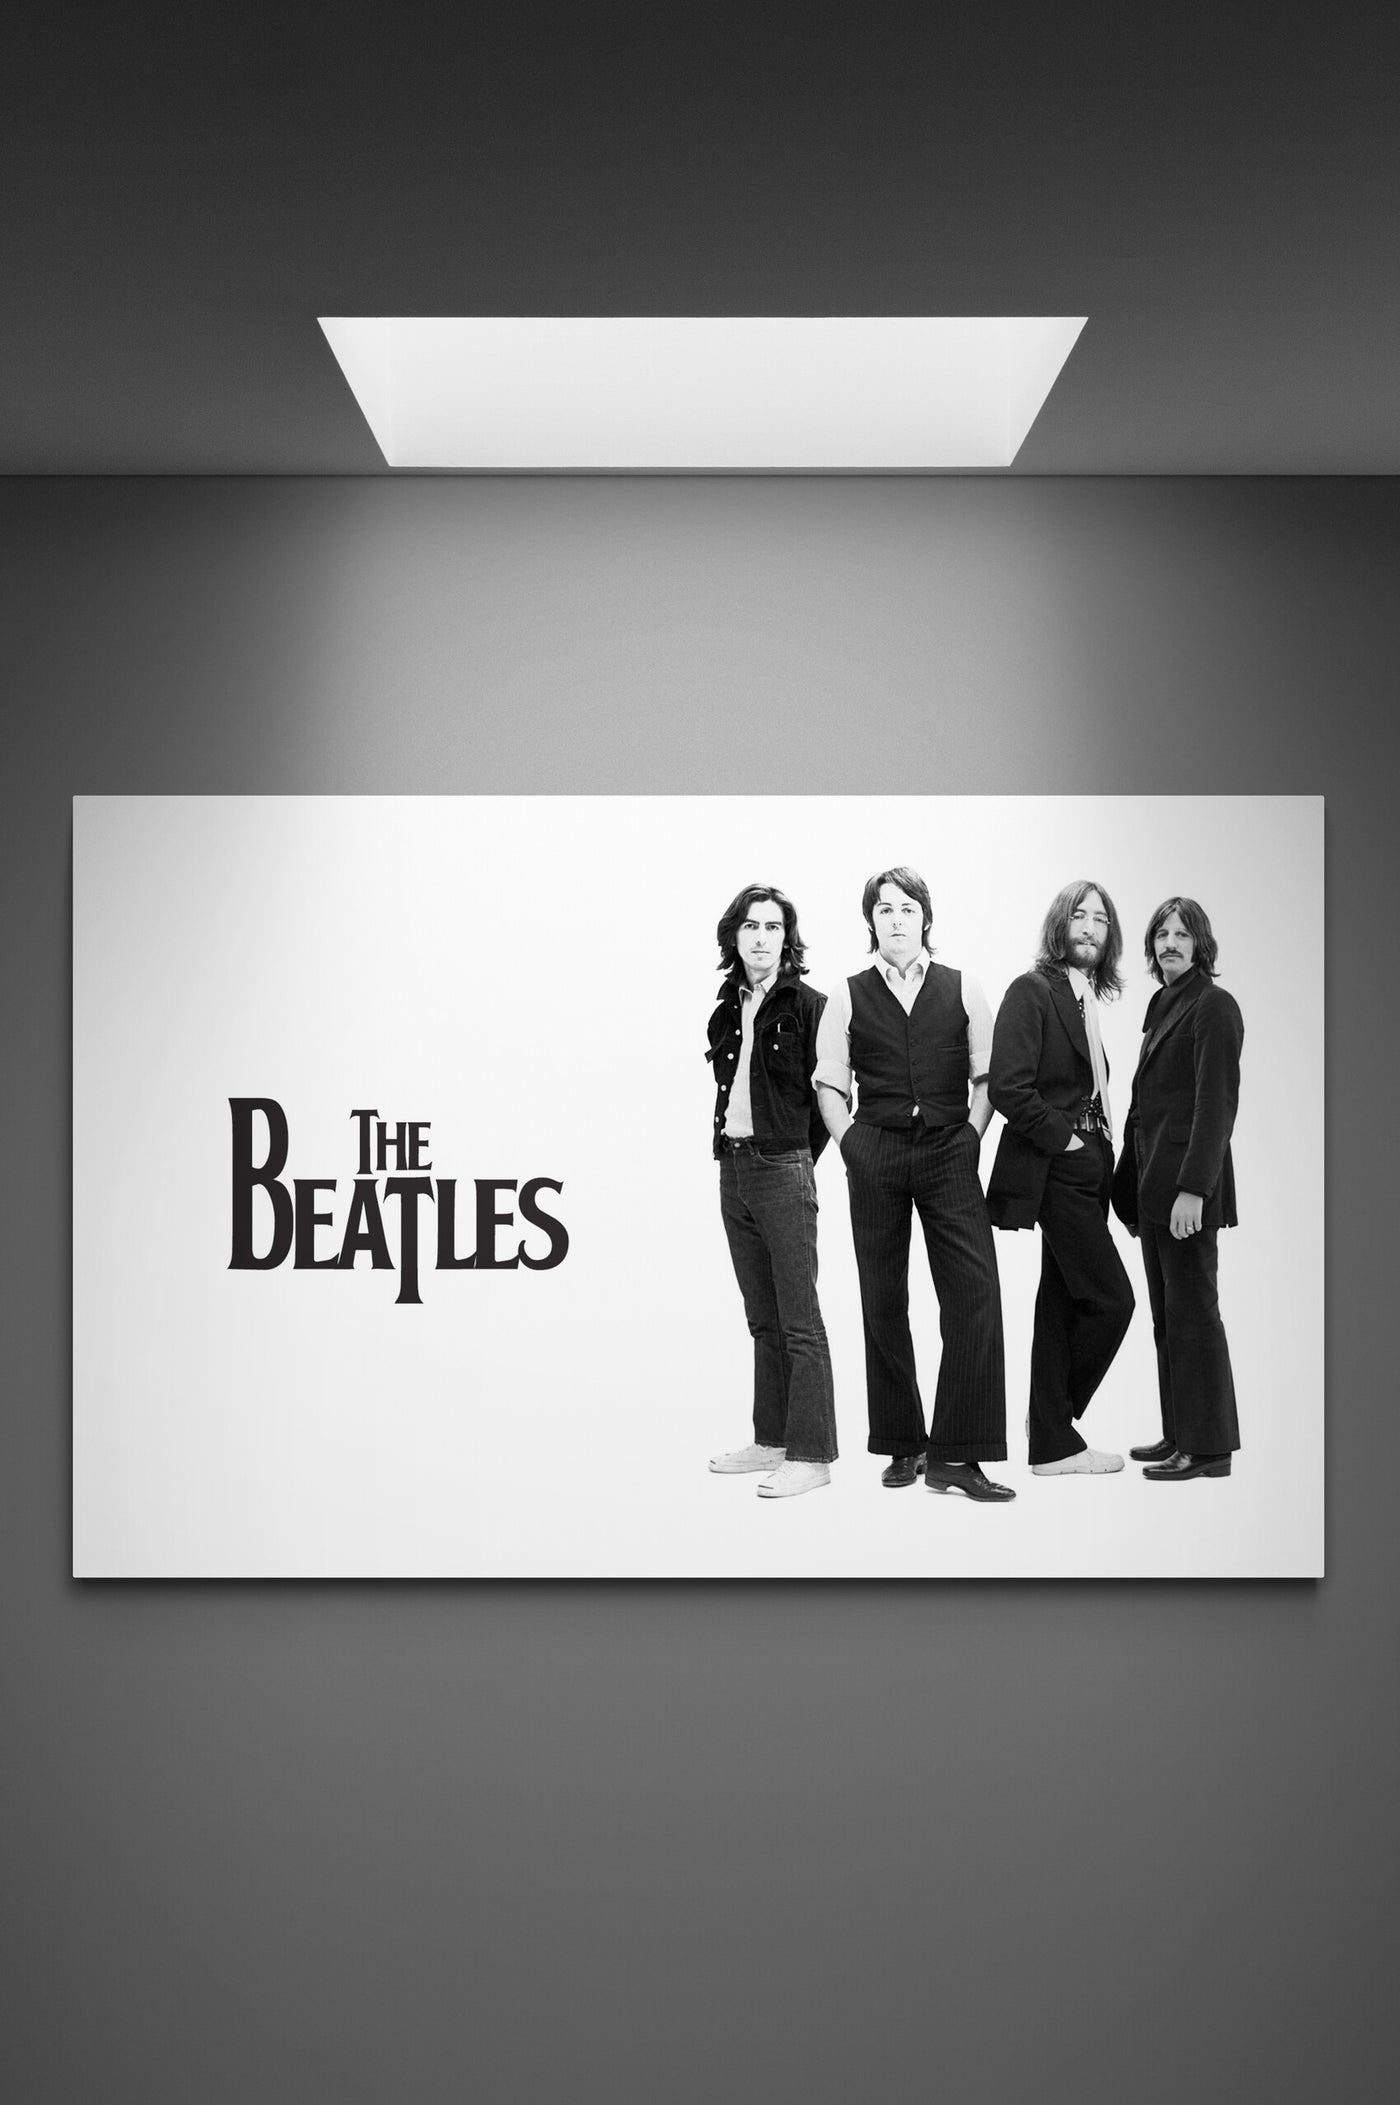 Tablou Canvas The Beatles artists